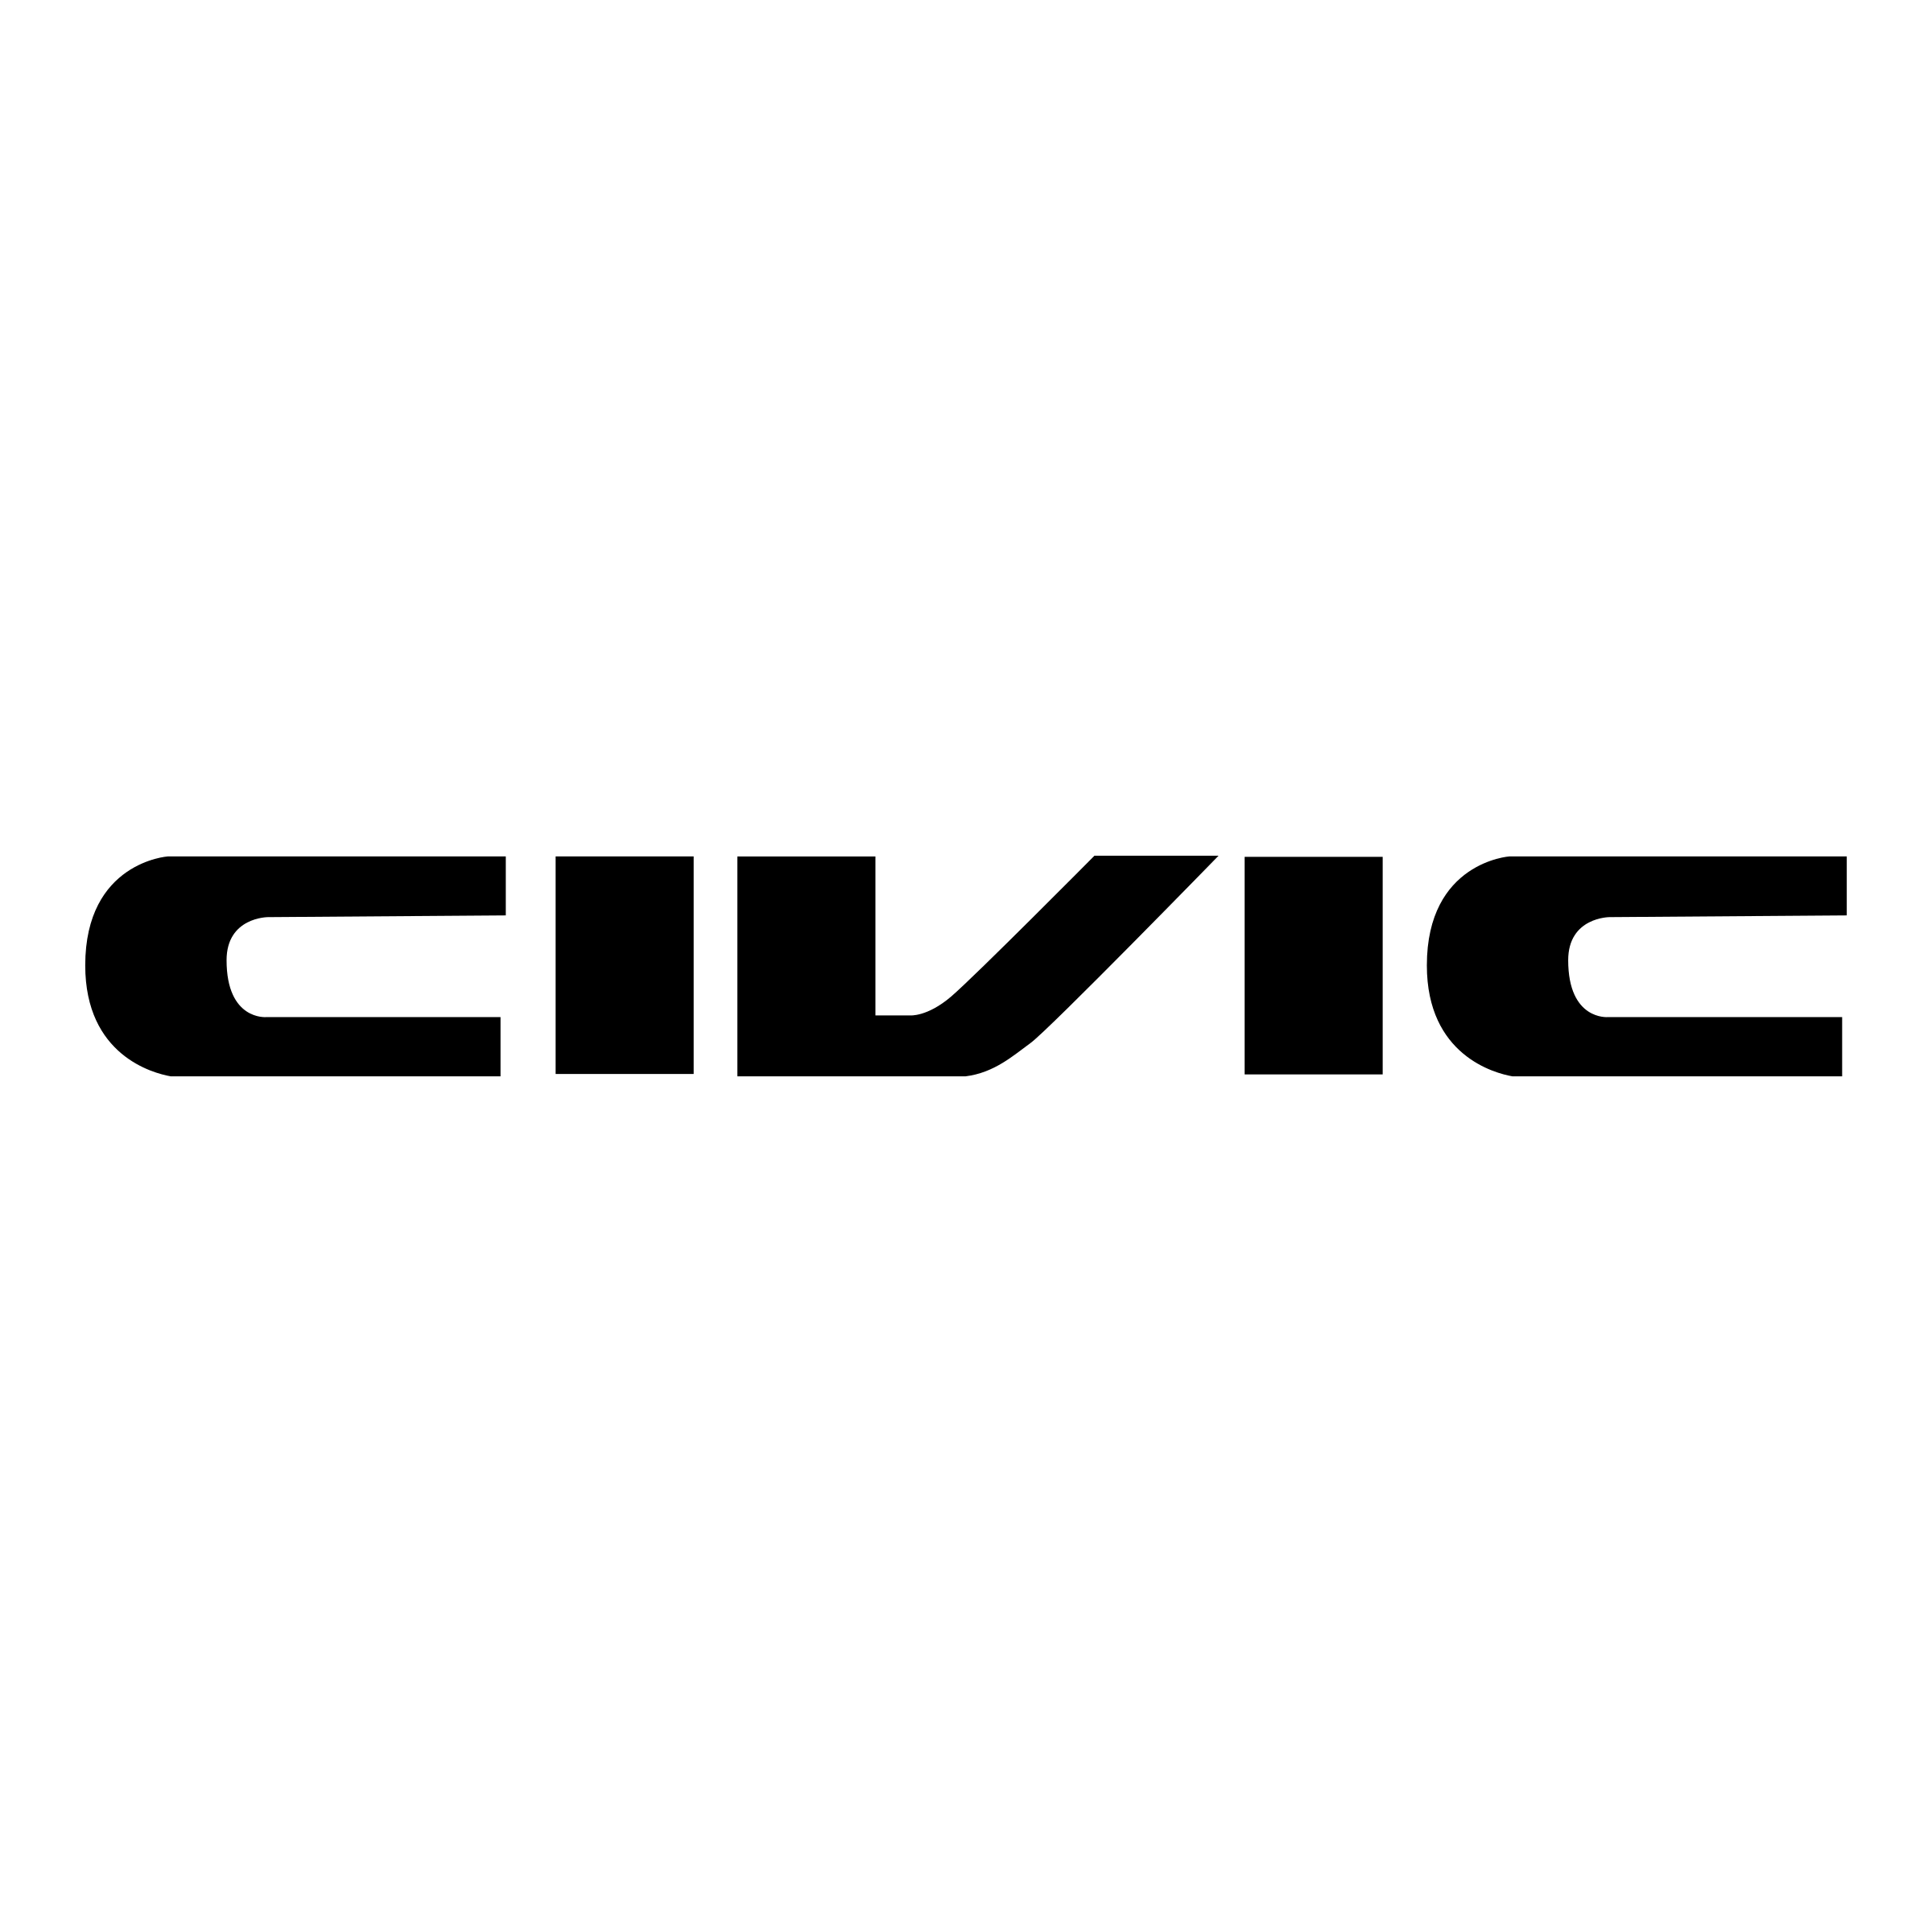 Civic Logo - Civic Logo PNG Transparent & SVG Vector - Freebie Supply